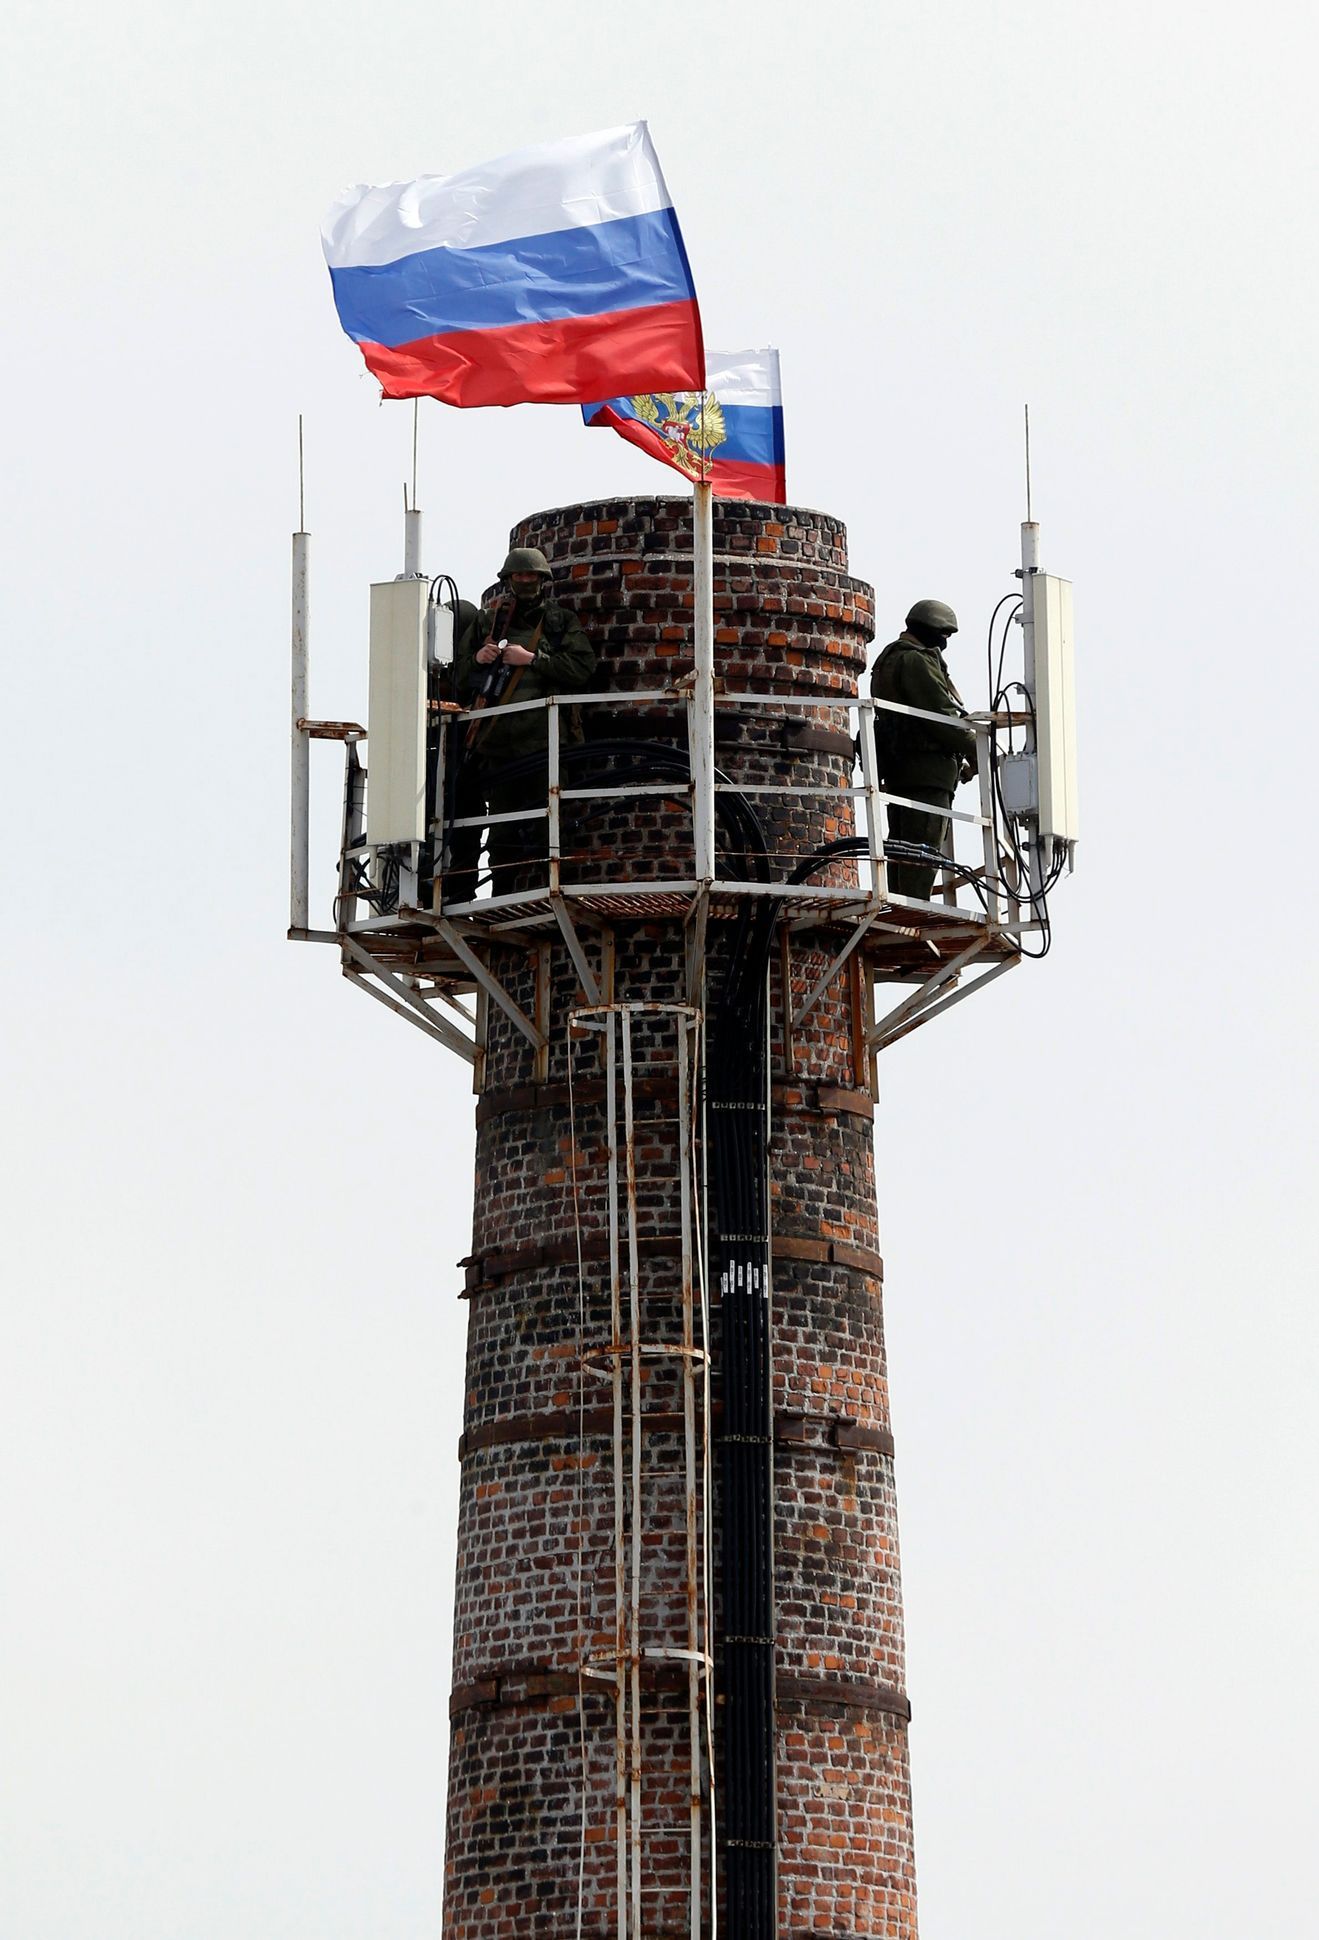 Rusové vyvěsili vlajky na obsazené ruské základně v Sevastopolu.